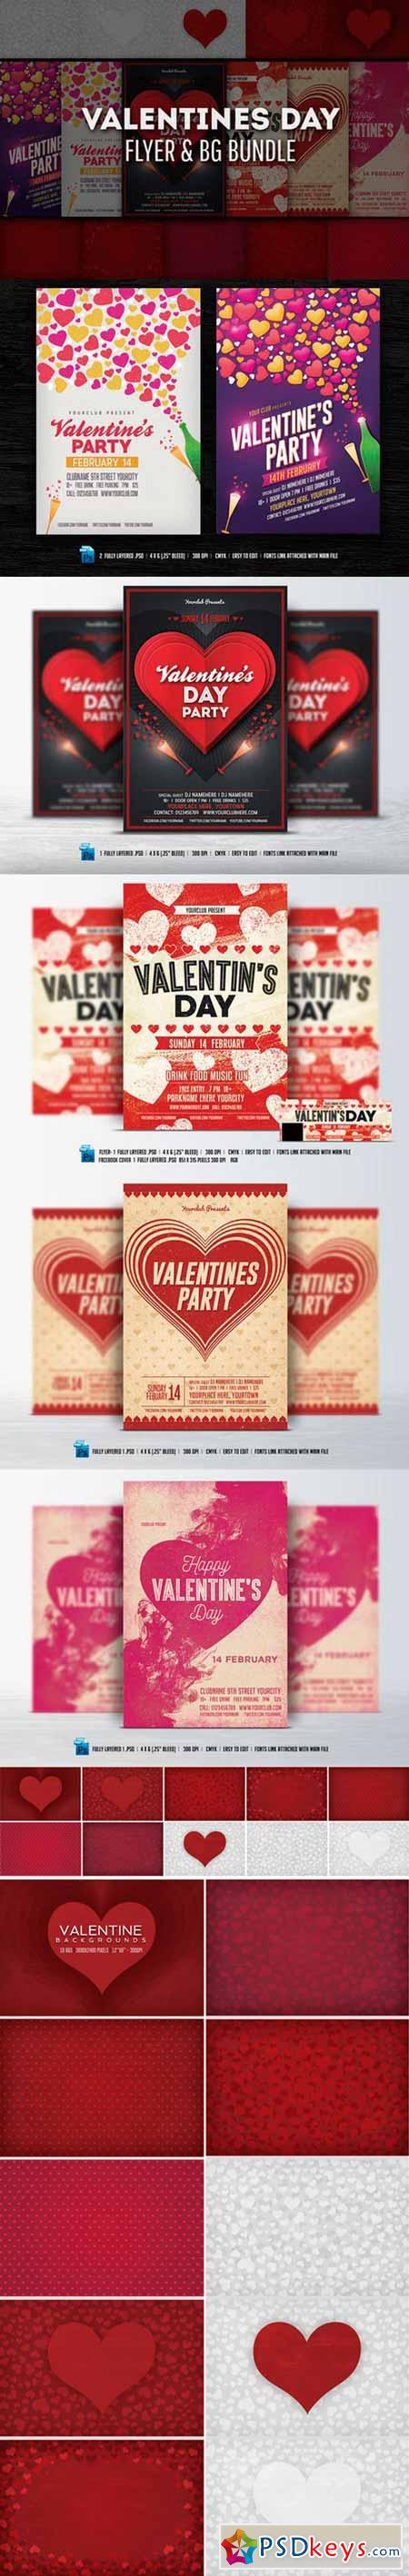 Valentines Day Flyer & BG Bundle 501946